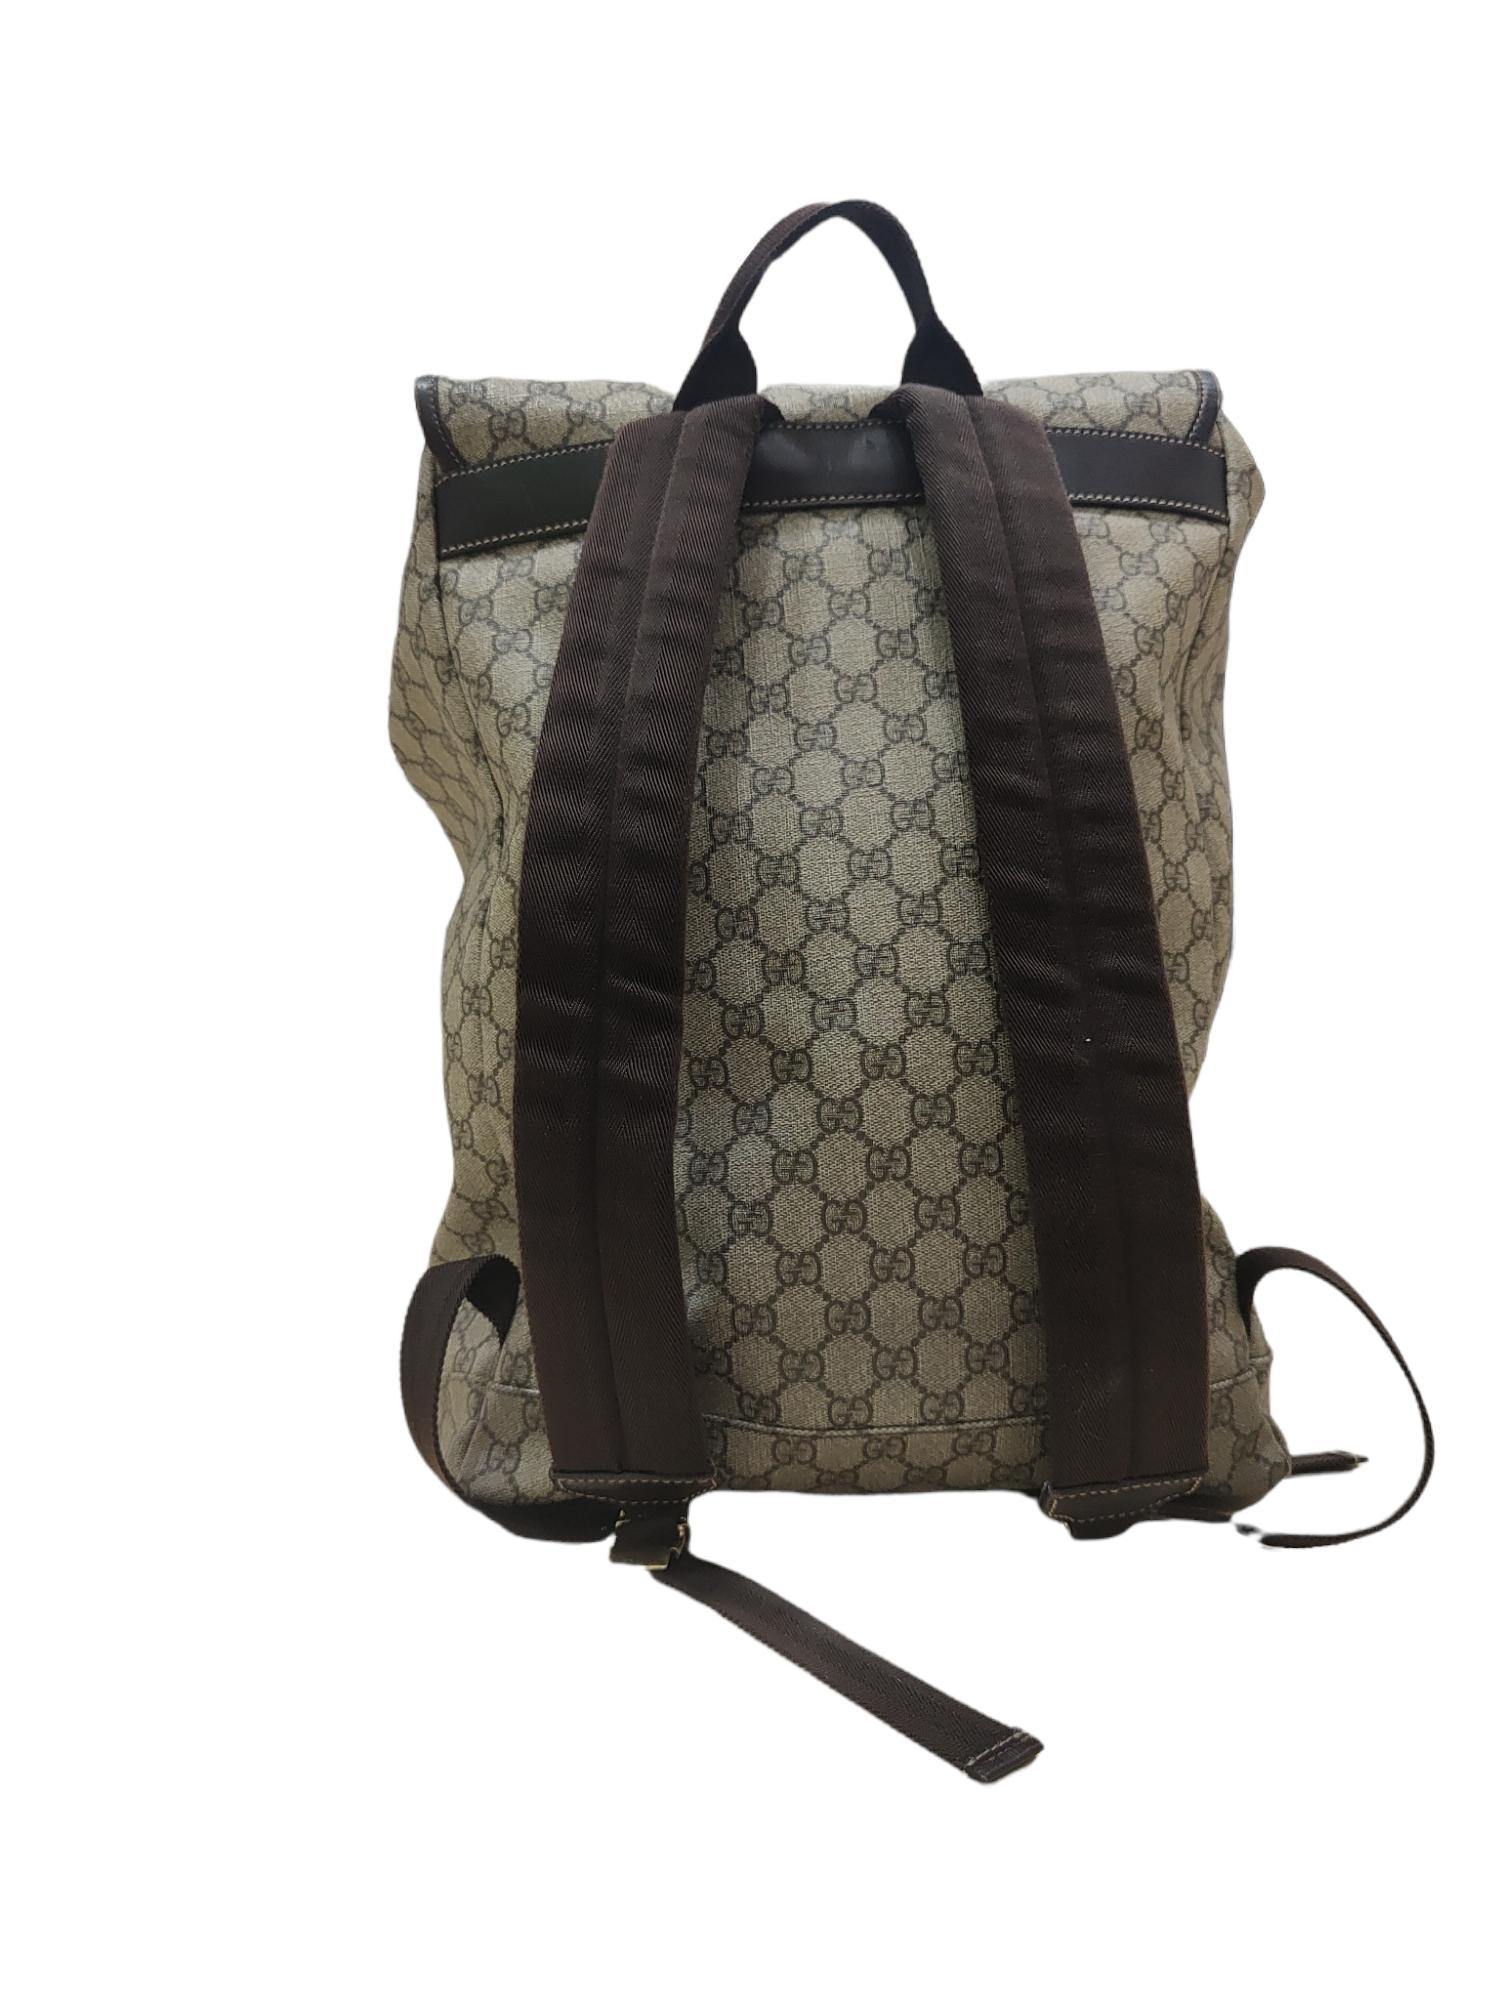 Gray Gucci GG Monogram backpack